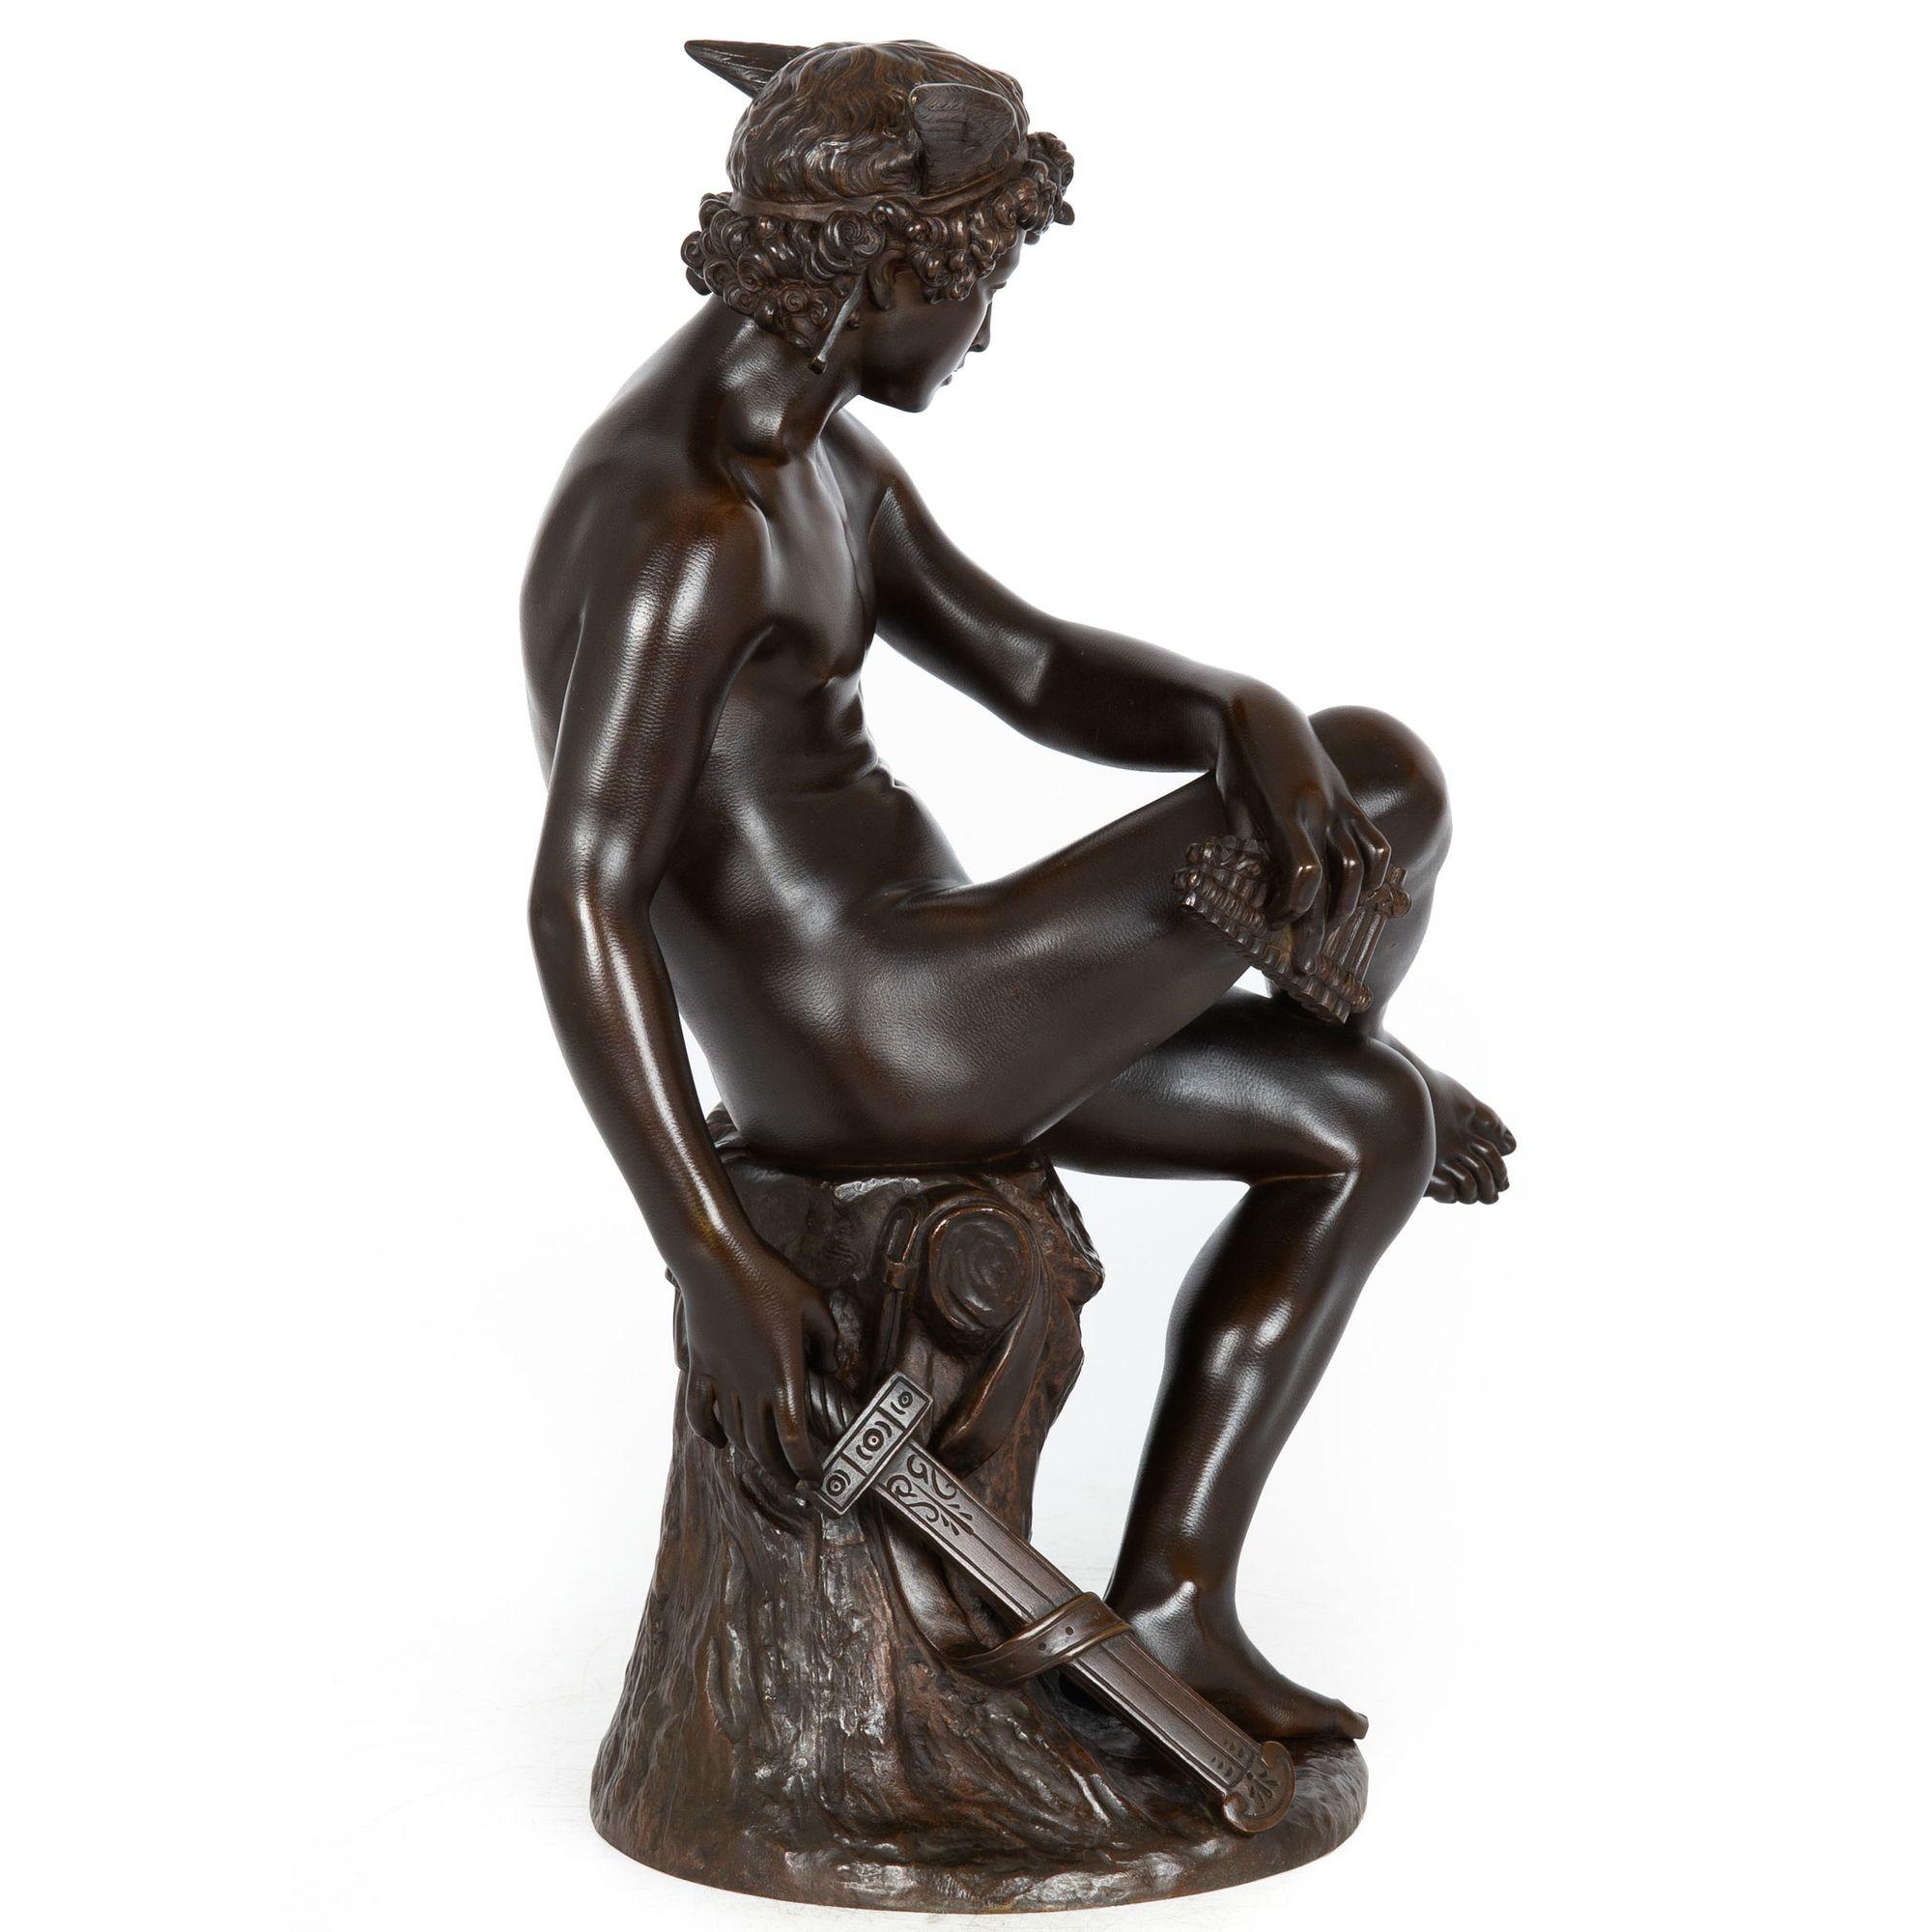 19th Century Rare French Antique Bronze Sculpture “Mercury” by Pierre Marius Montagne